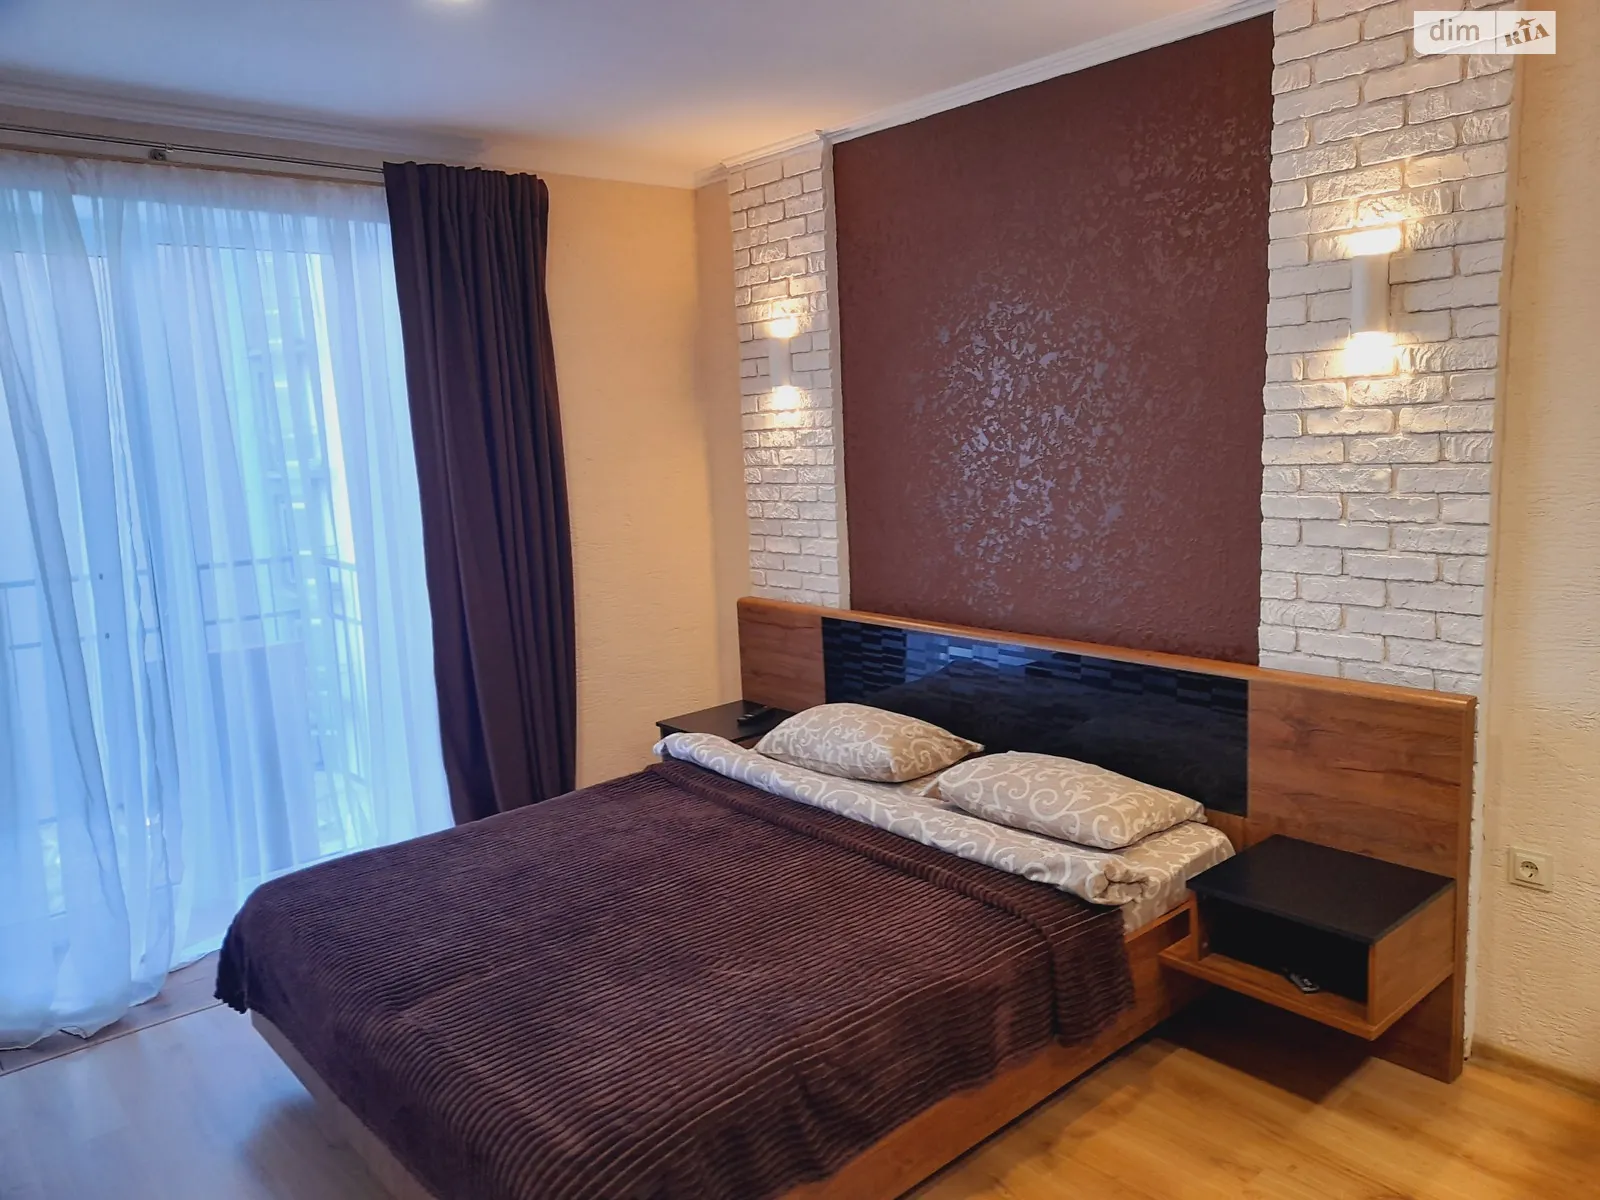 Сдается в аренду 1-комнатная квартира в Ивано-Франковске, цена: 790 грн